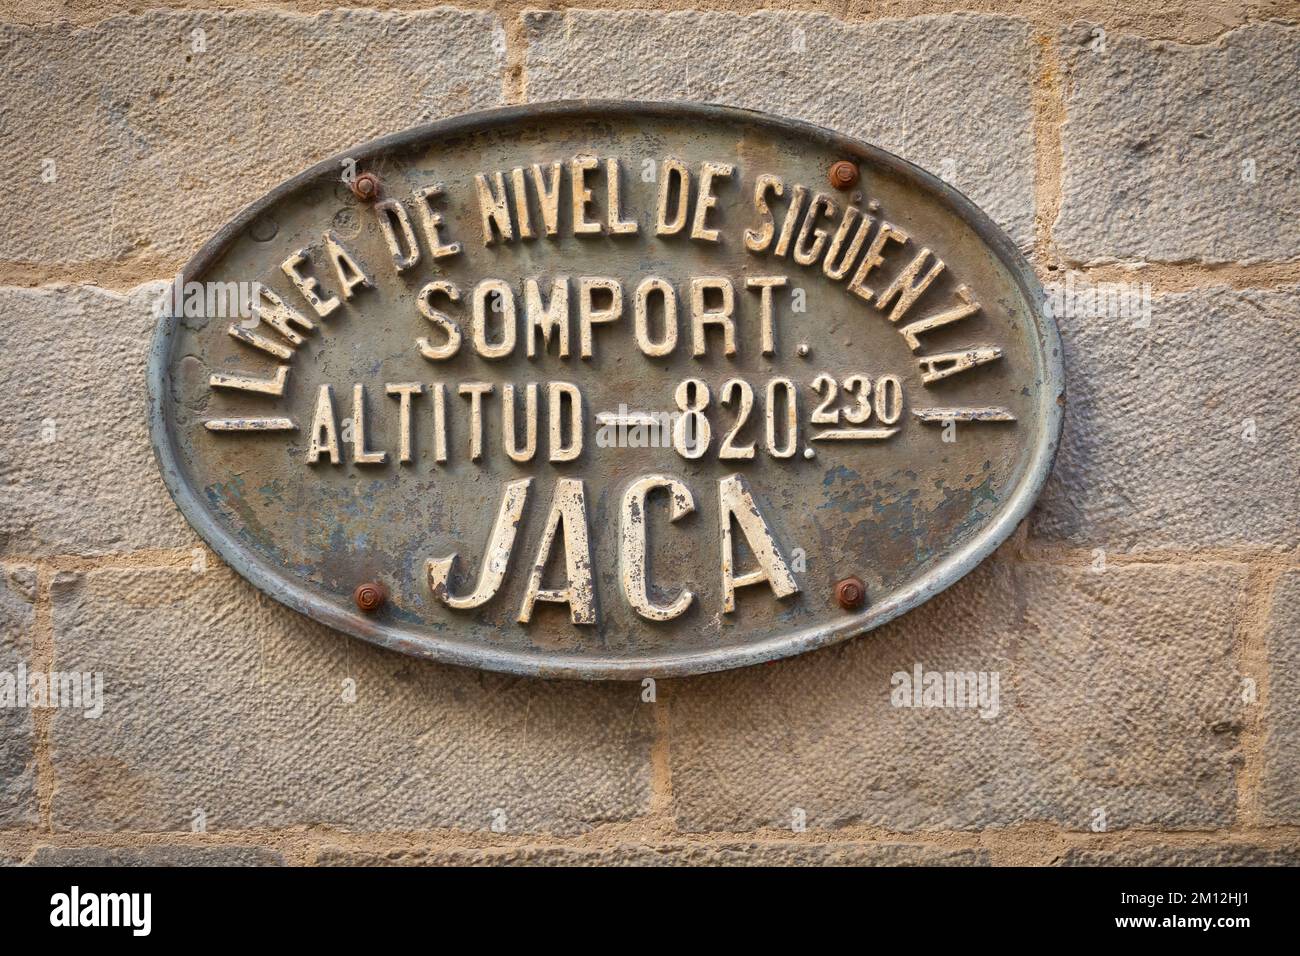 Linea de nivel de Sigüenza - Somport. Jaca, Jacetania, Huesca, Aragón, Spain. Stock Photo